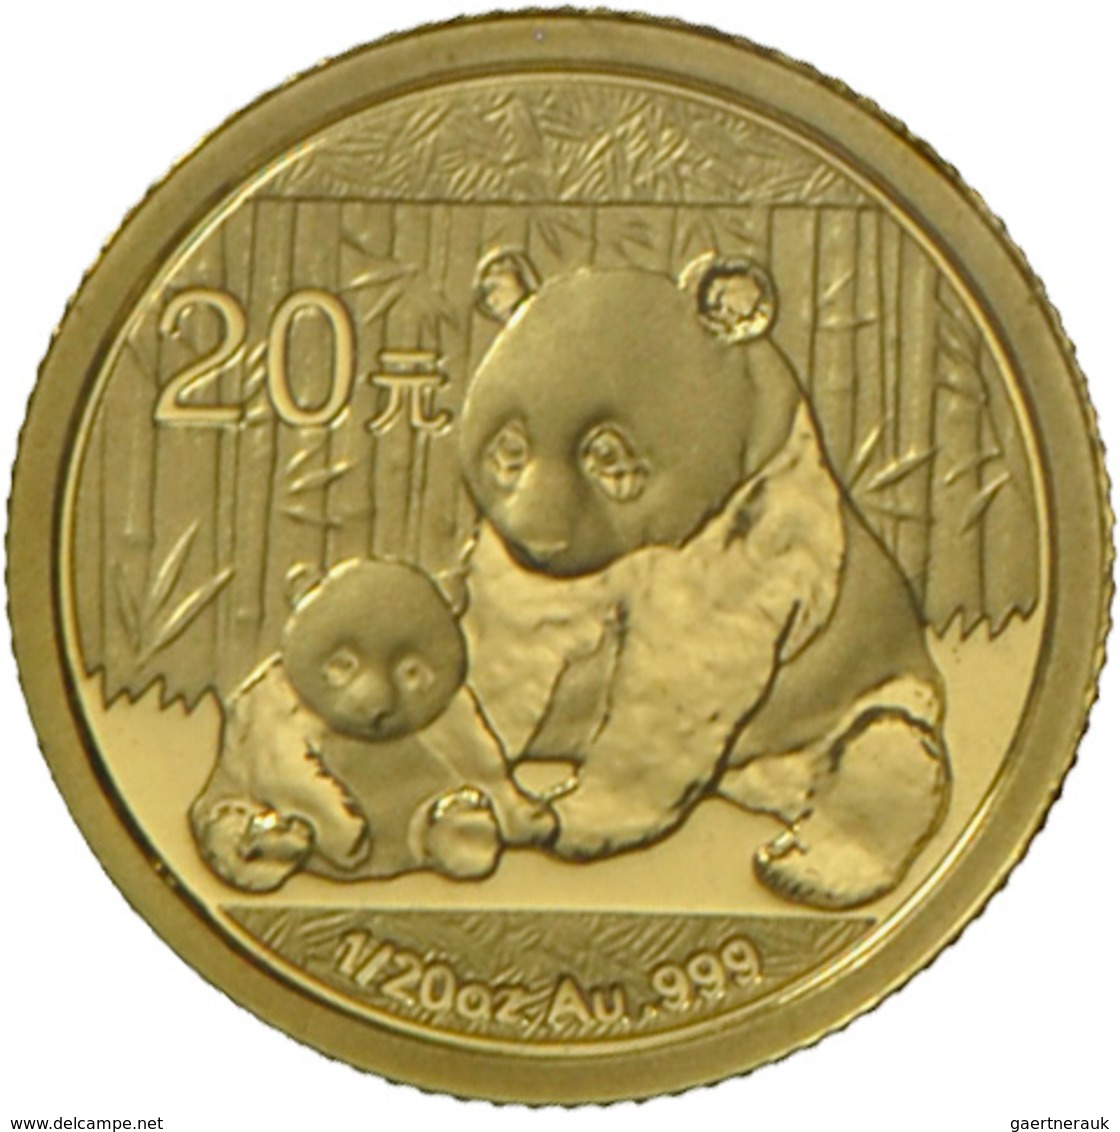 China - Volksrepublik - Anlagegold: Lot 8 Diverse Goldmünzen: 2 X 1/20 OZ China Panda 2012; 4 X 1/10 - China